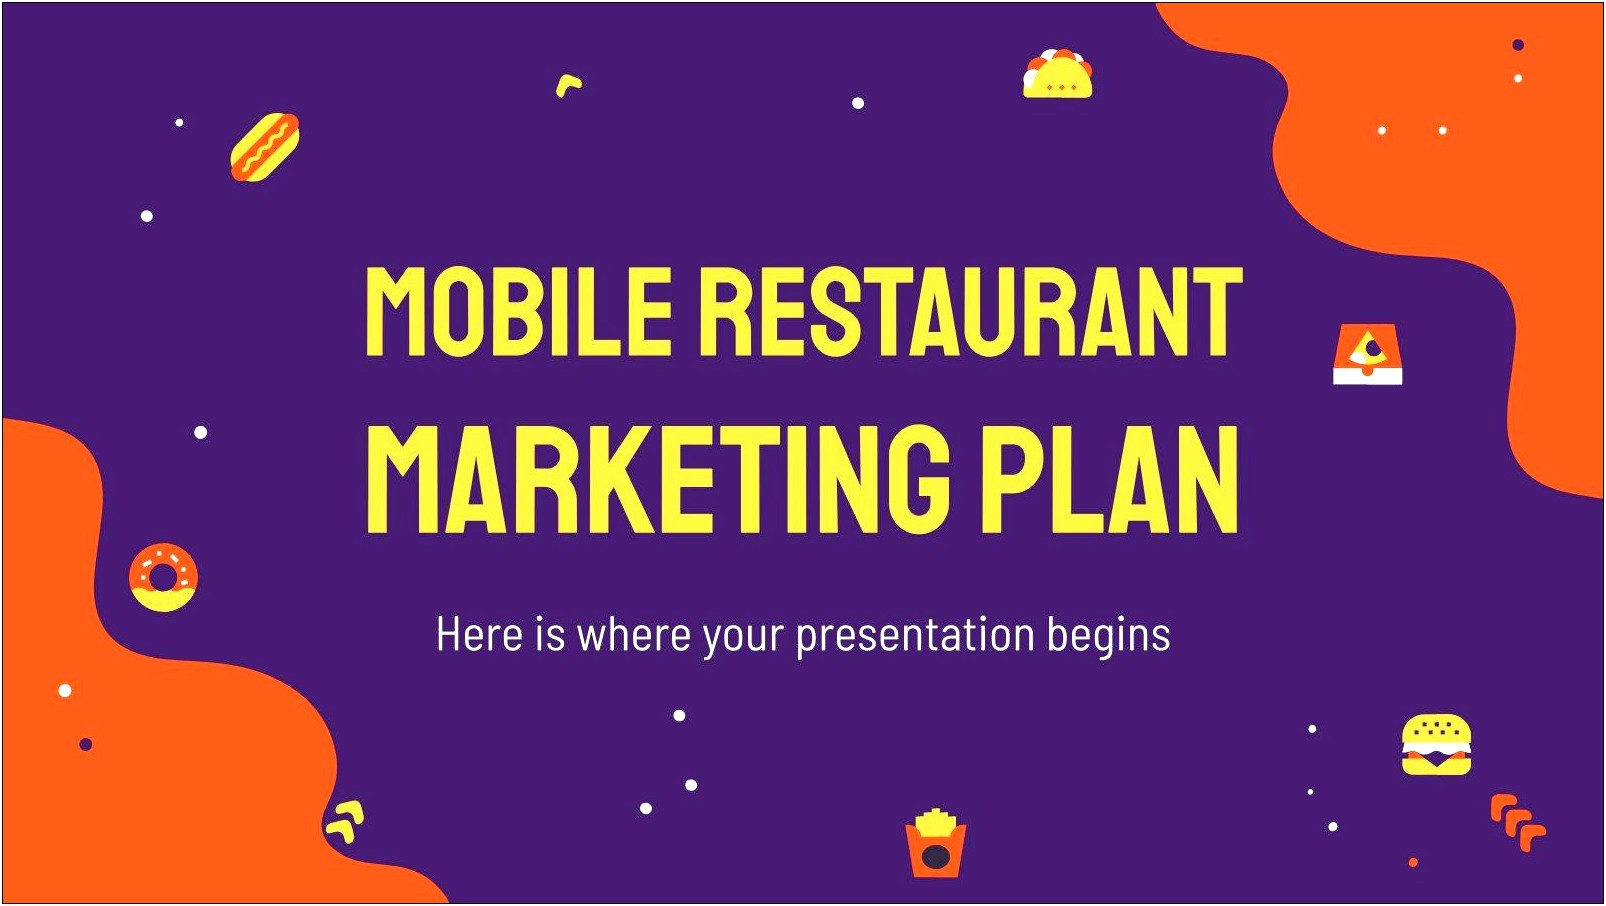 Free Digital Marketing Proposal Template For Restaurant